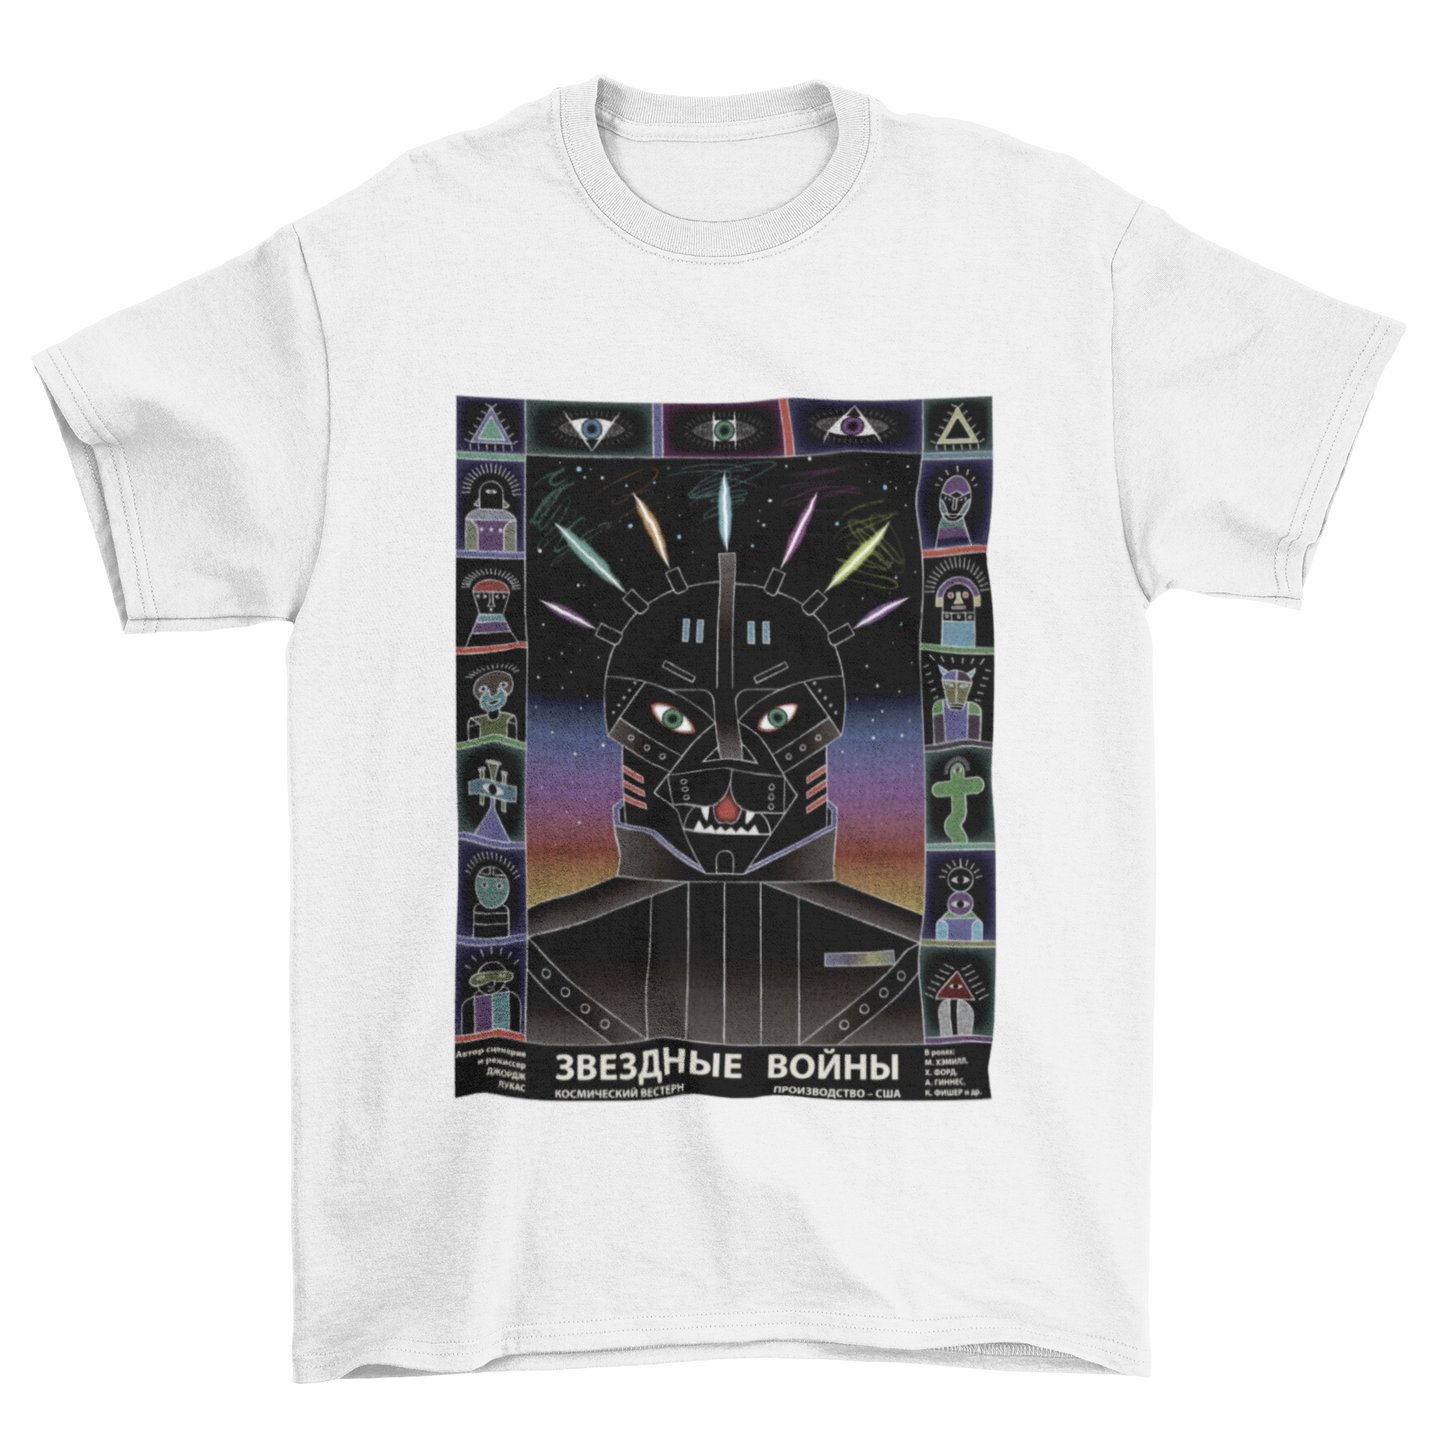 Soviet Star Wars T-Shirt